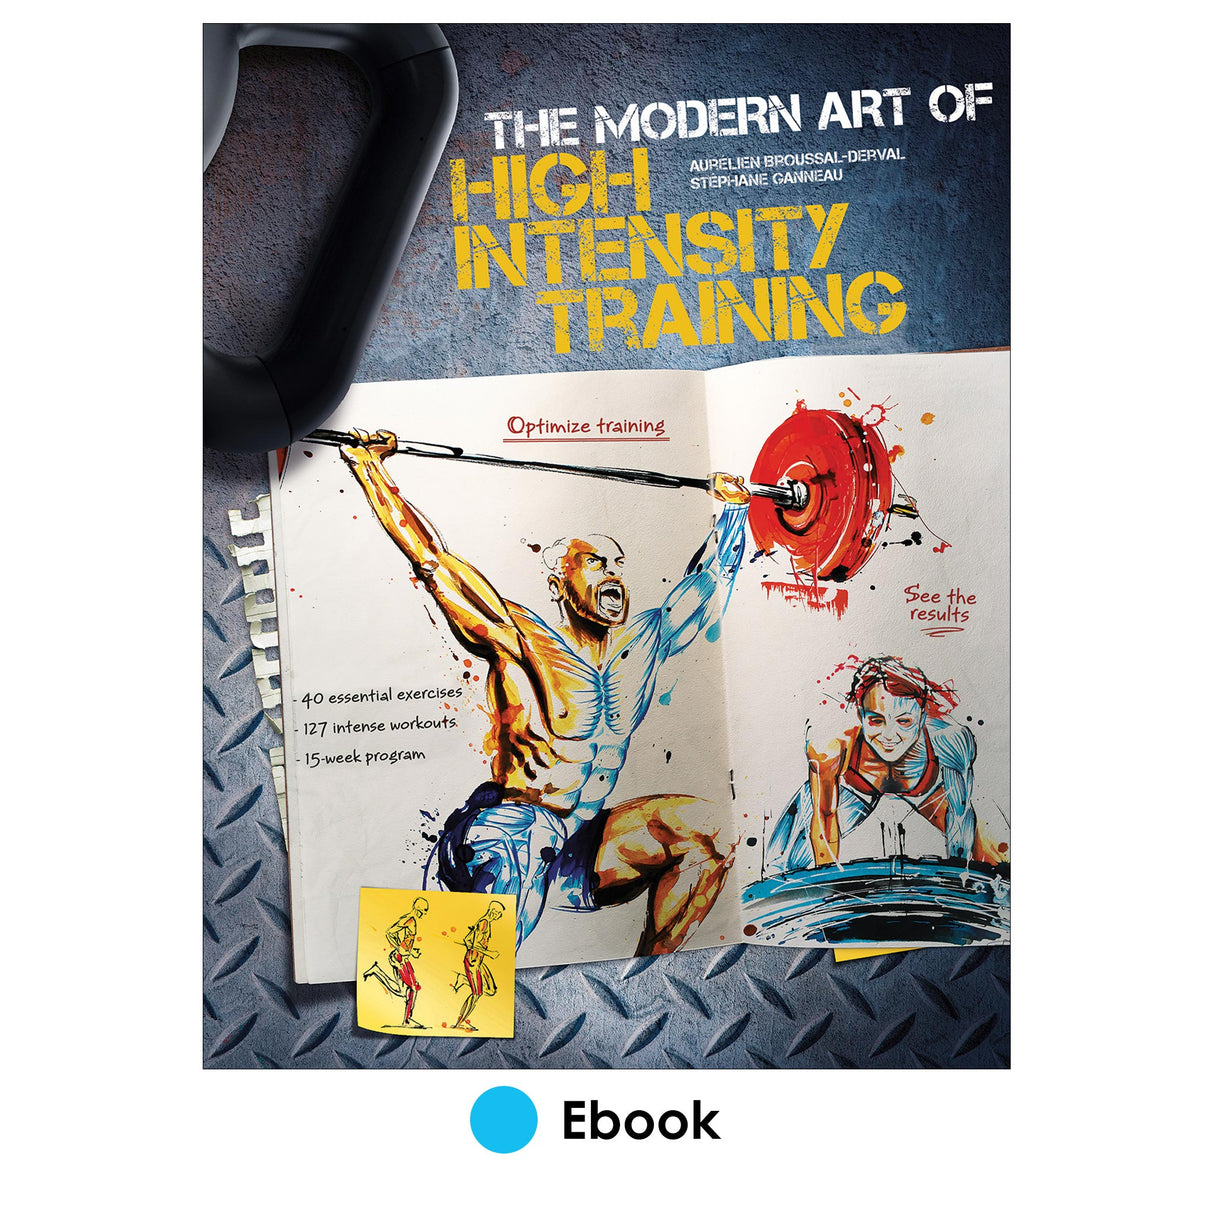 Modern Art of High Intensity Training PDF, The